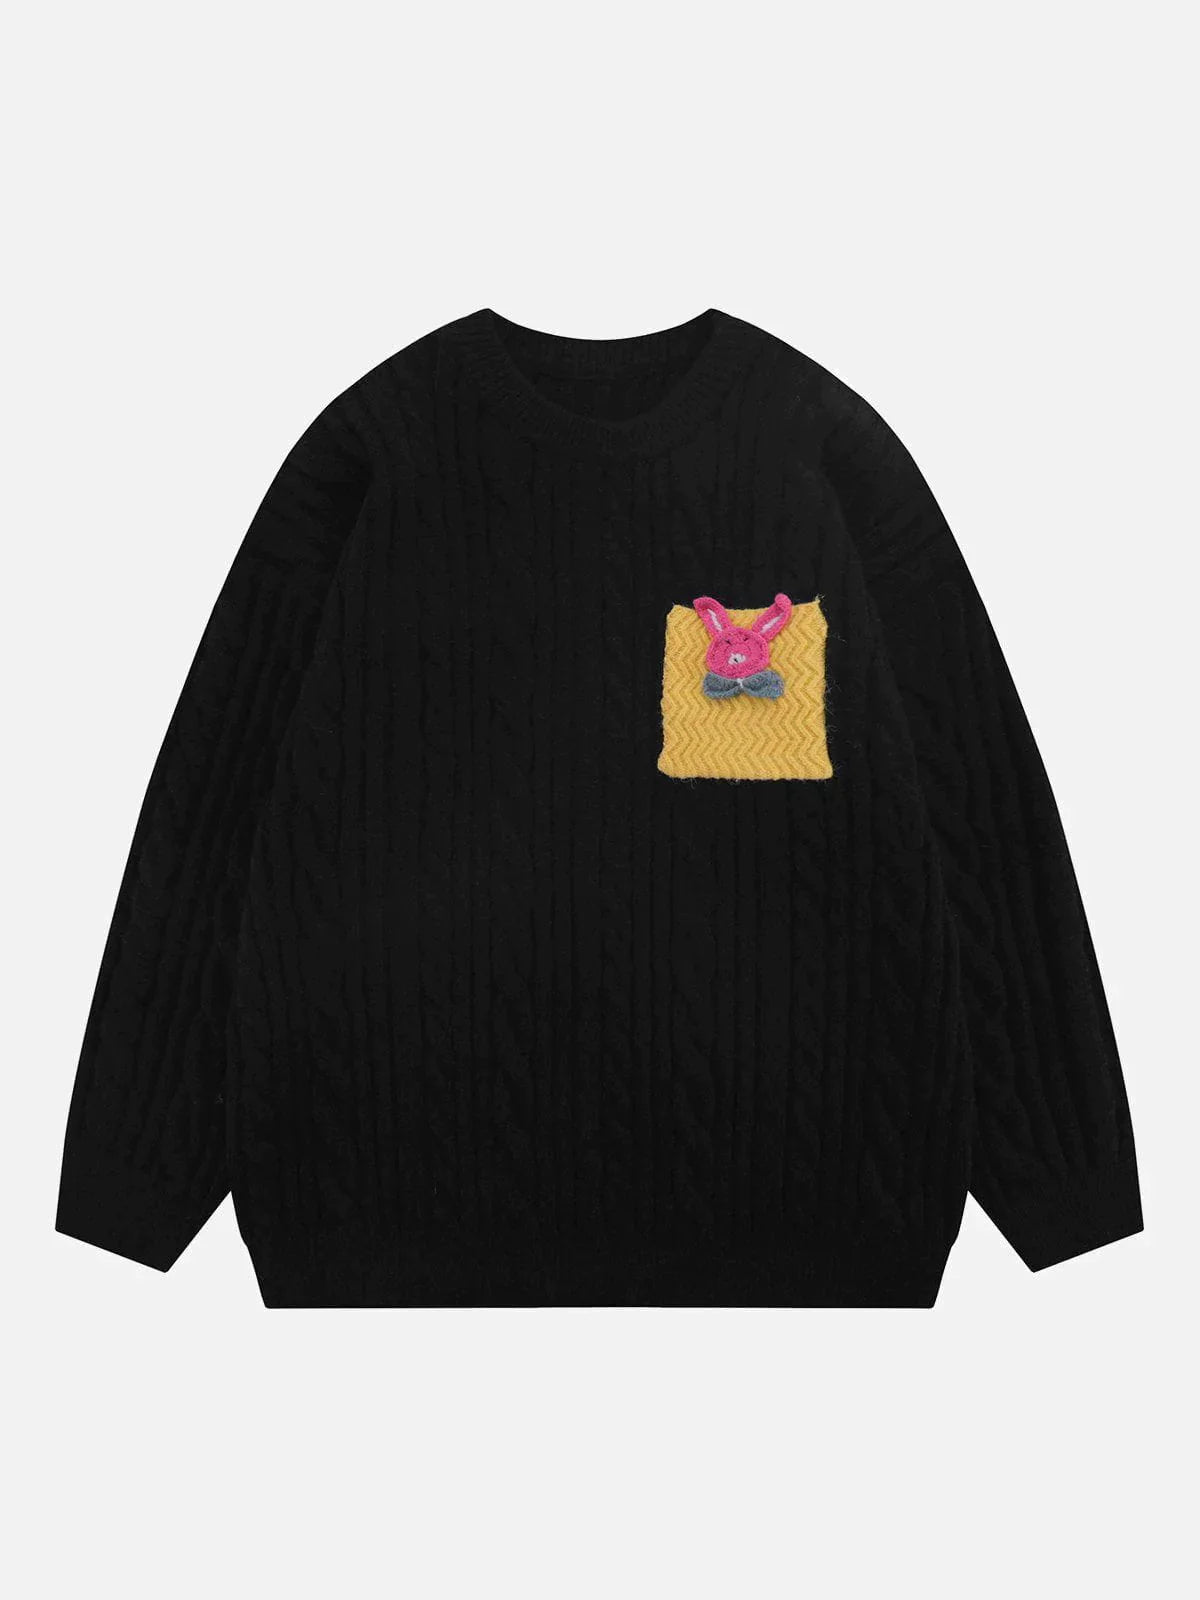 Majesda® - Bunny Pattern Sweater outfit ideas streetwear fashion